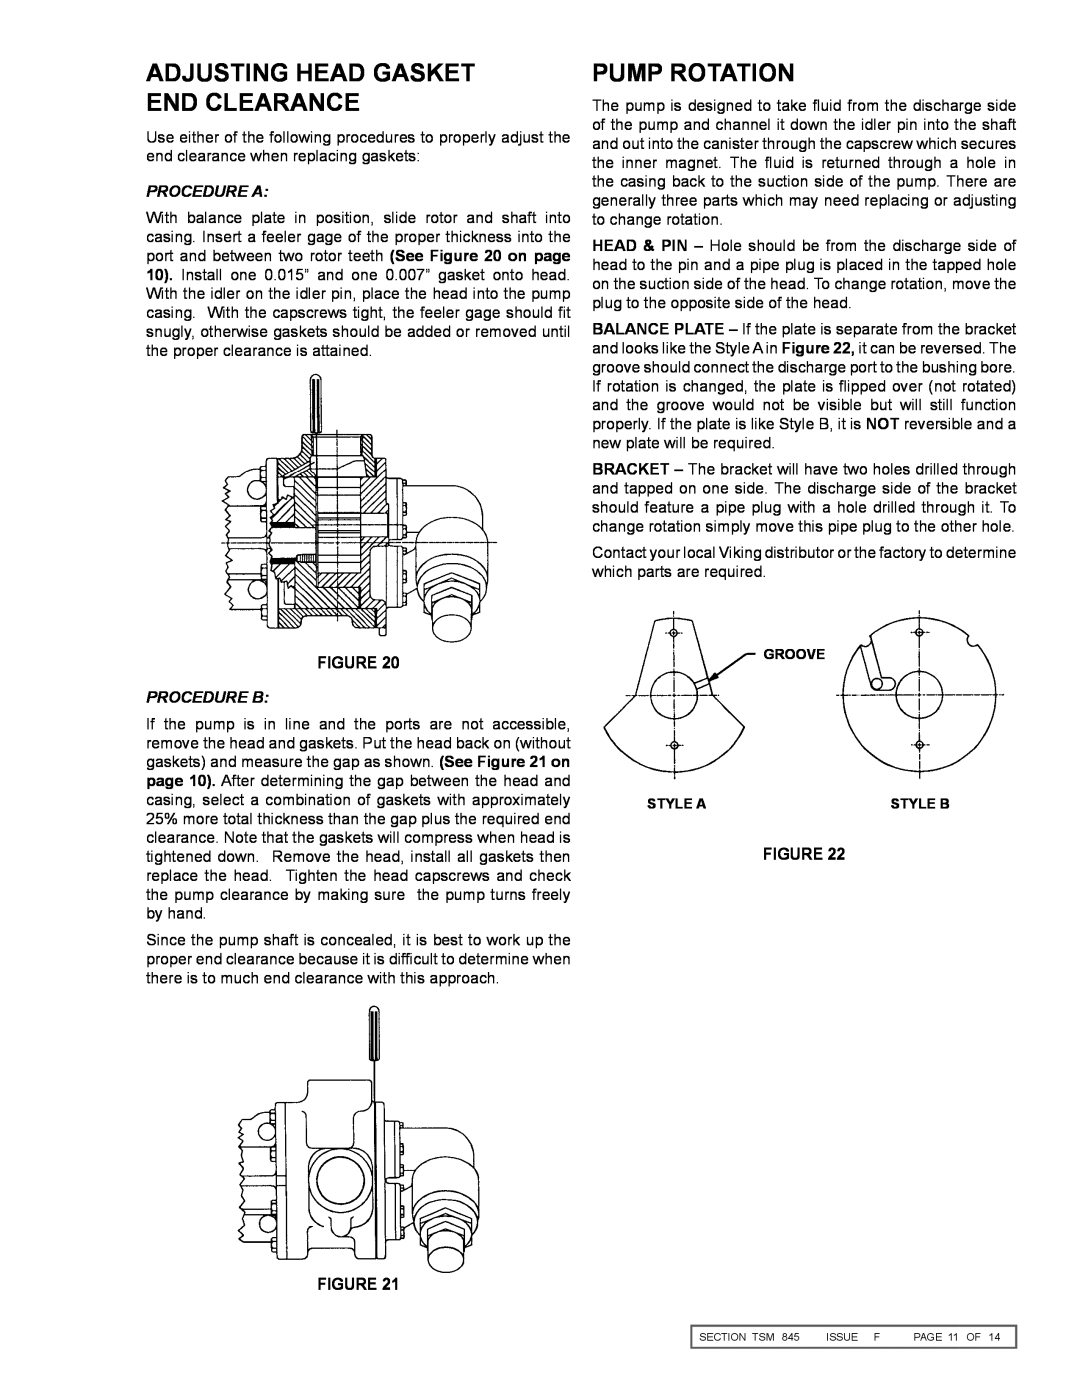 Viking K-827, KK825, KK827, K-825, K-823, KK823 Adjusting Head Gasket End Clearance, Pump Rotation, Procedure A, Procedure B 